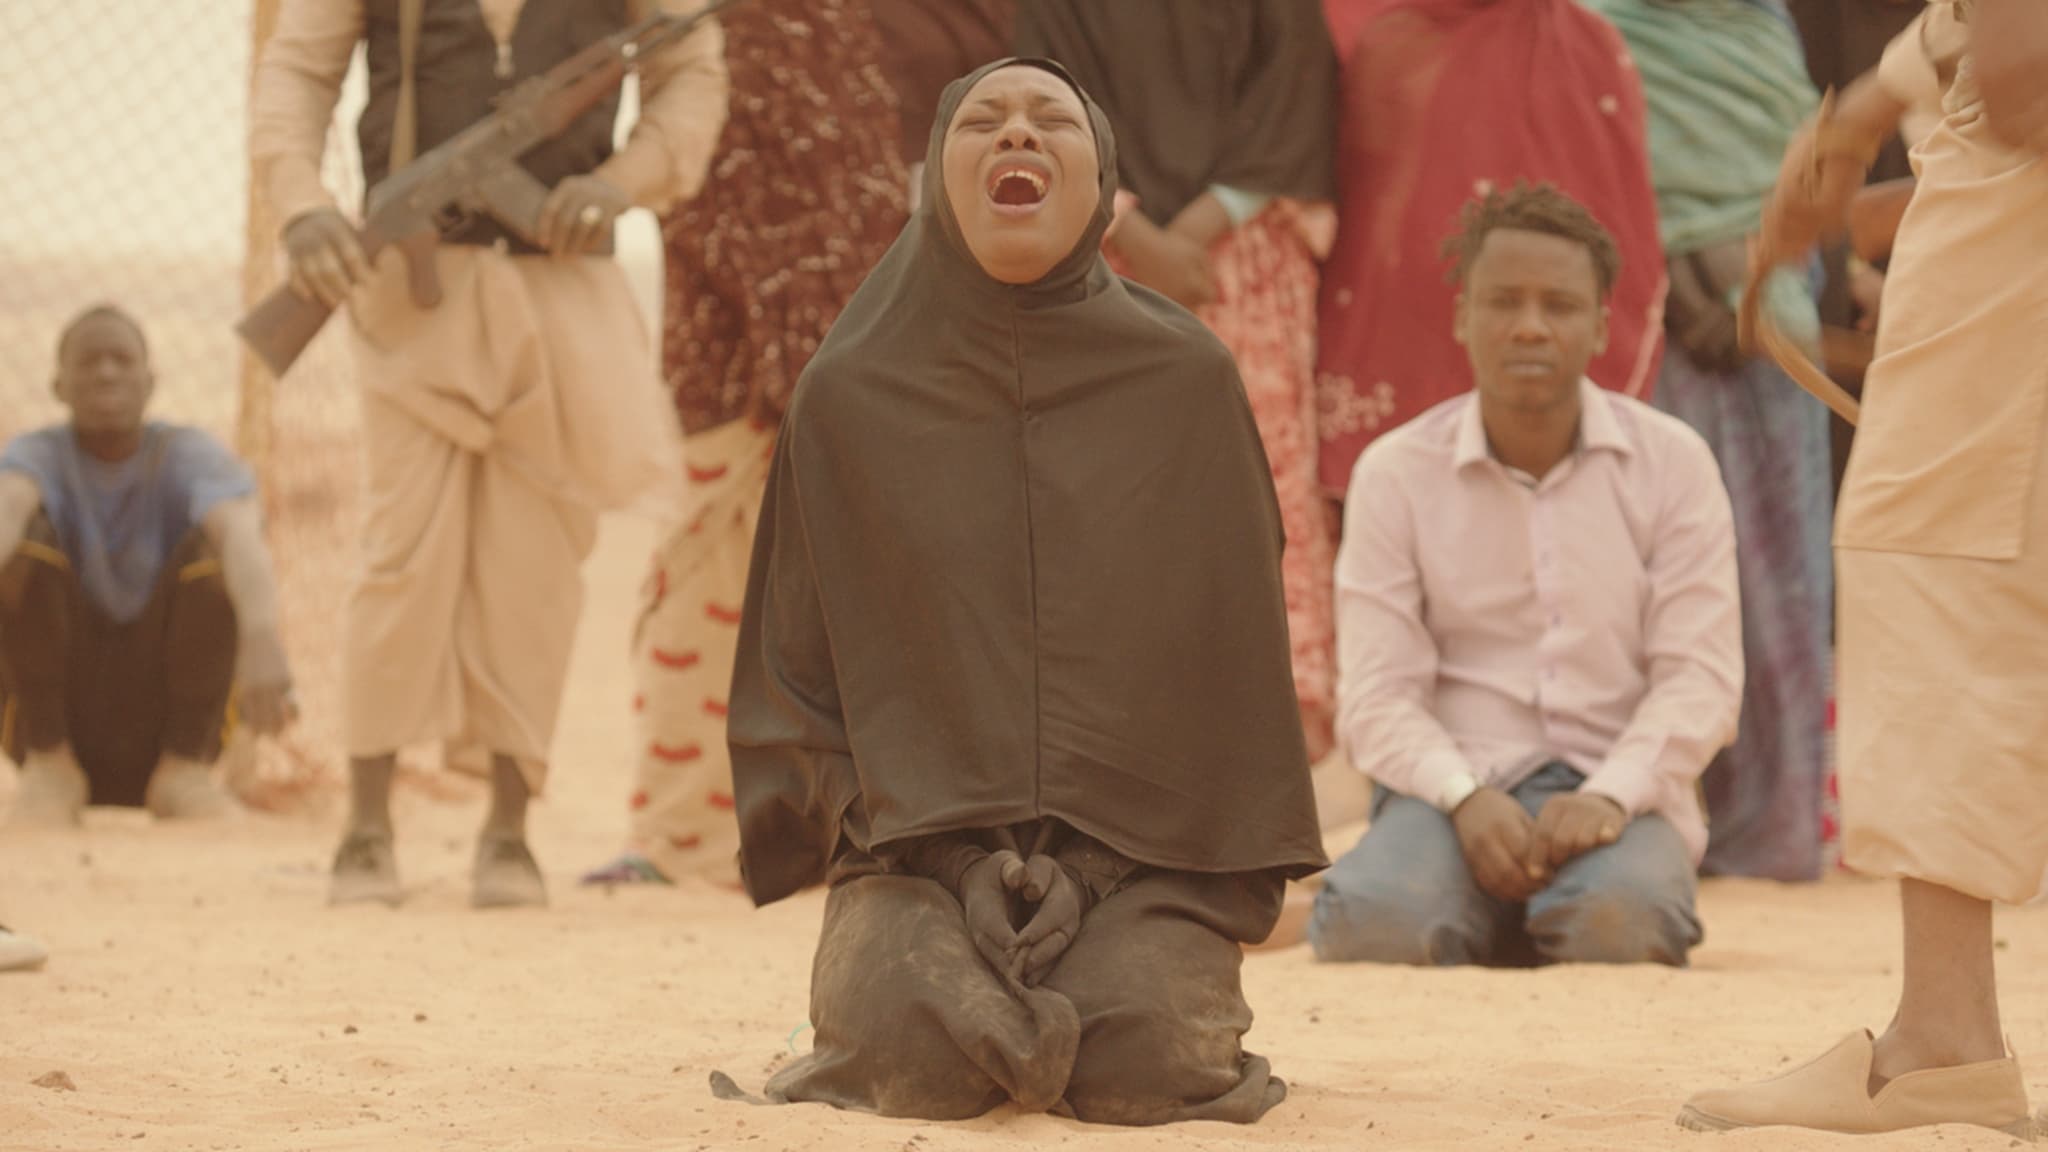 Image du film Timbuktu uu8odnq7qykuwdsoc21asodu7oejpg